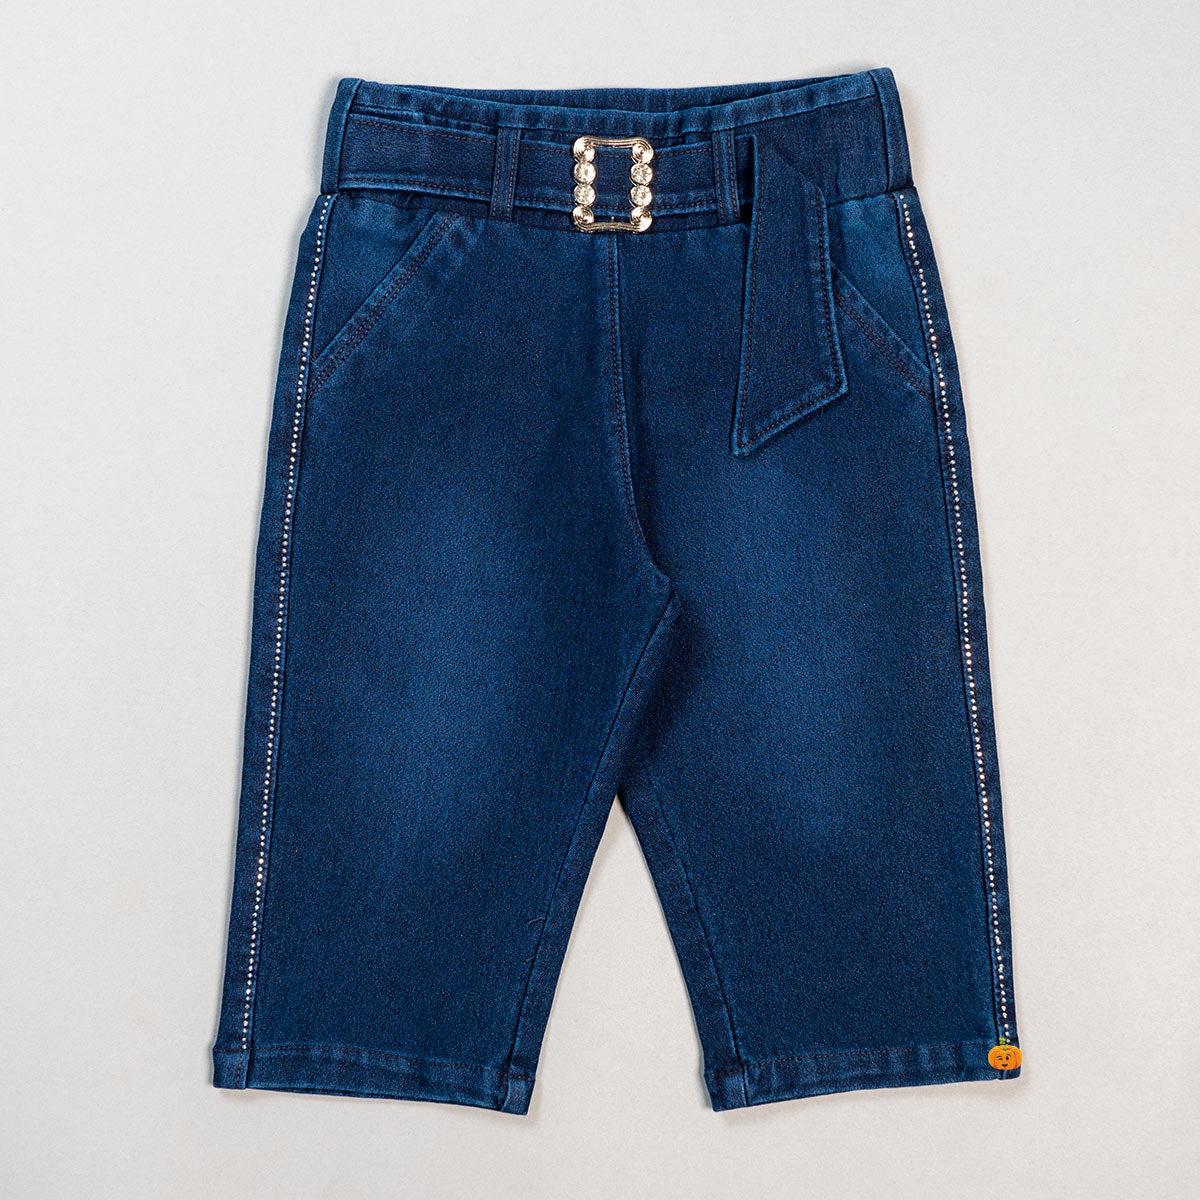 Girls Capri pants 105 | Girls capri pants, Clothes design, Fashion trends